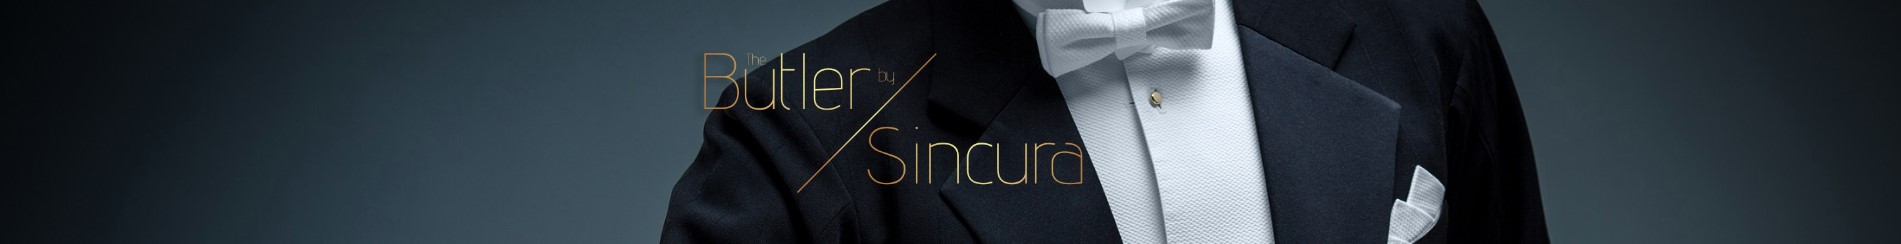 sincura white label concierge services personal assitance butler